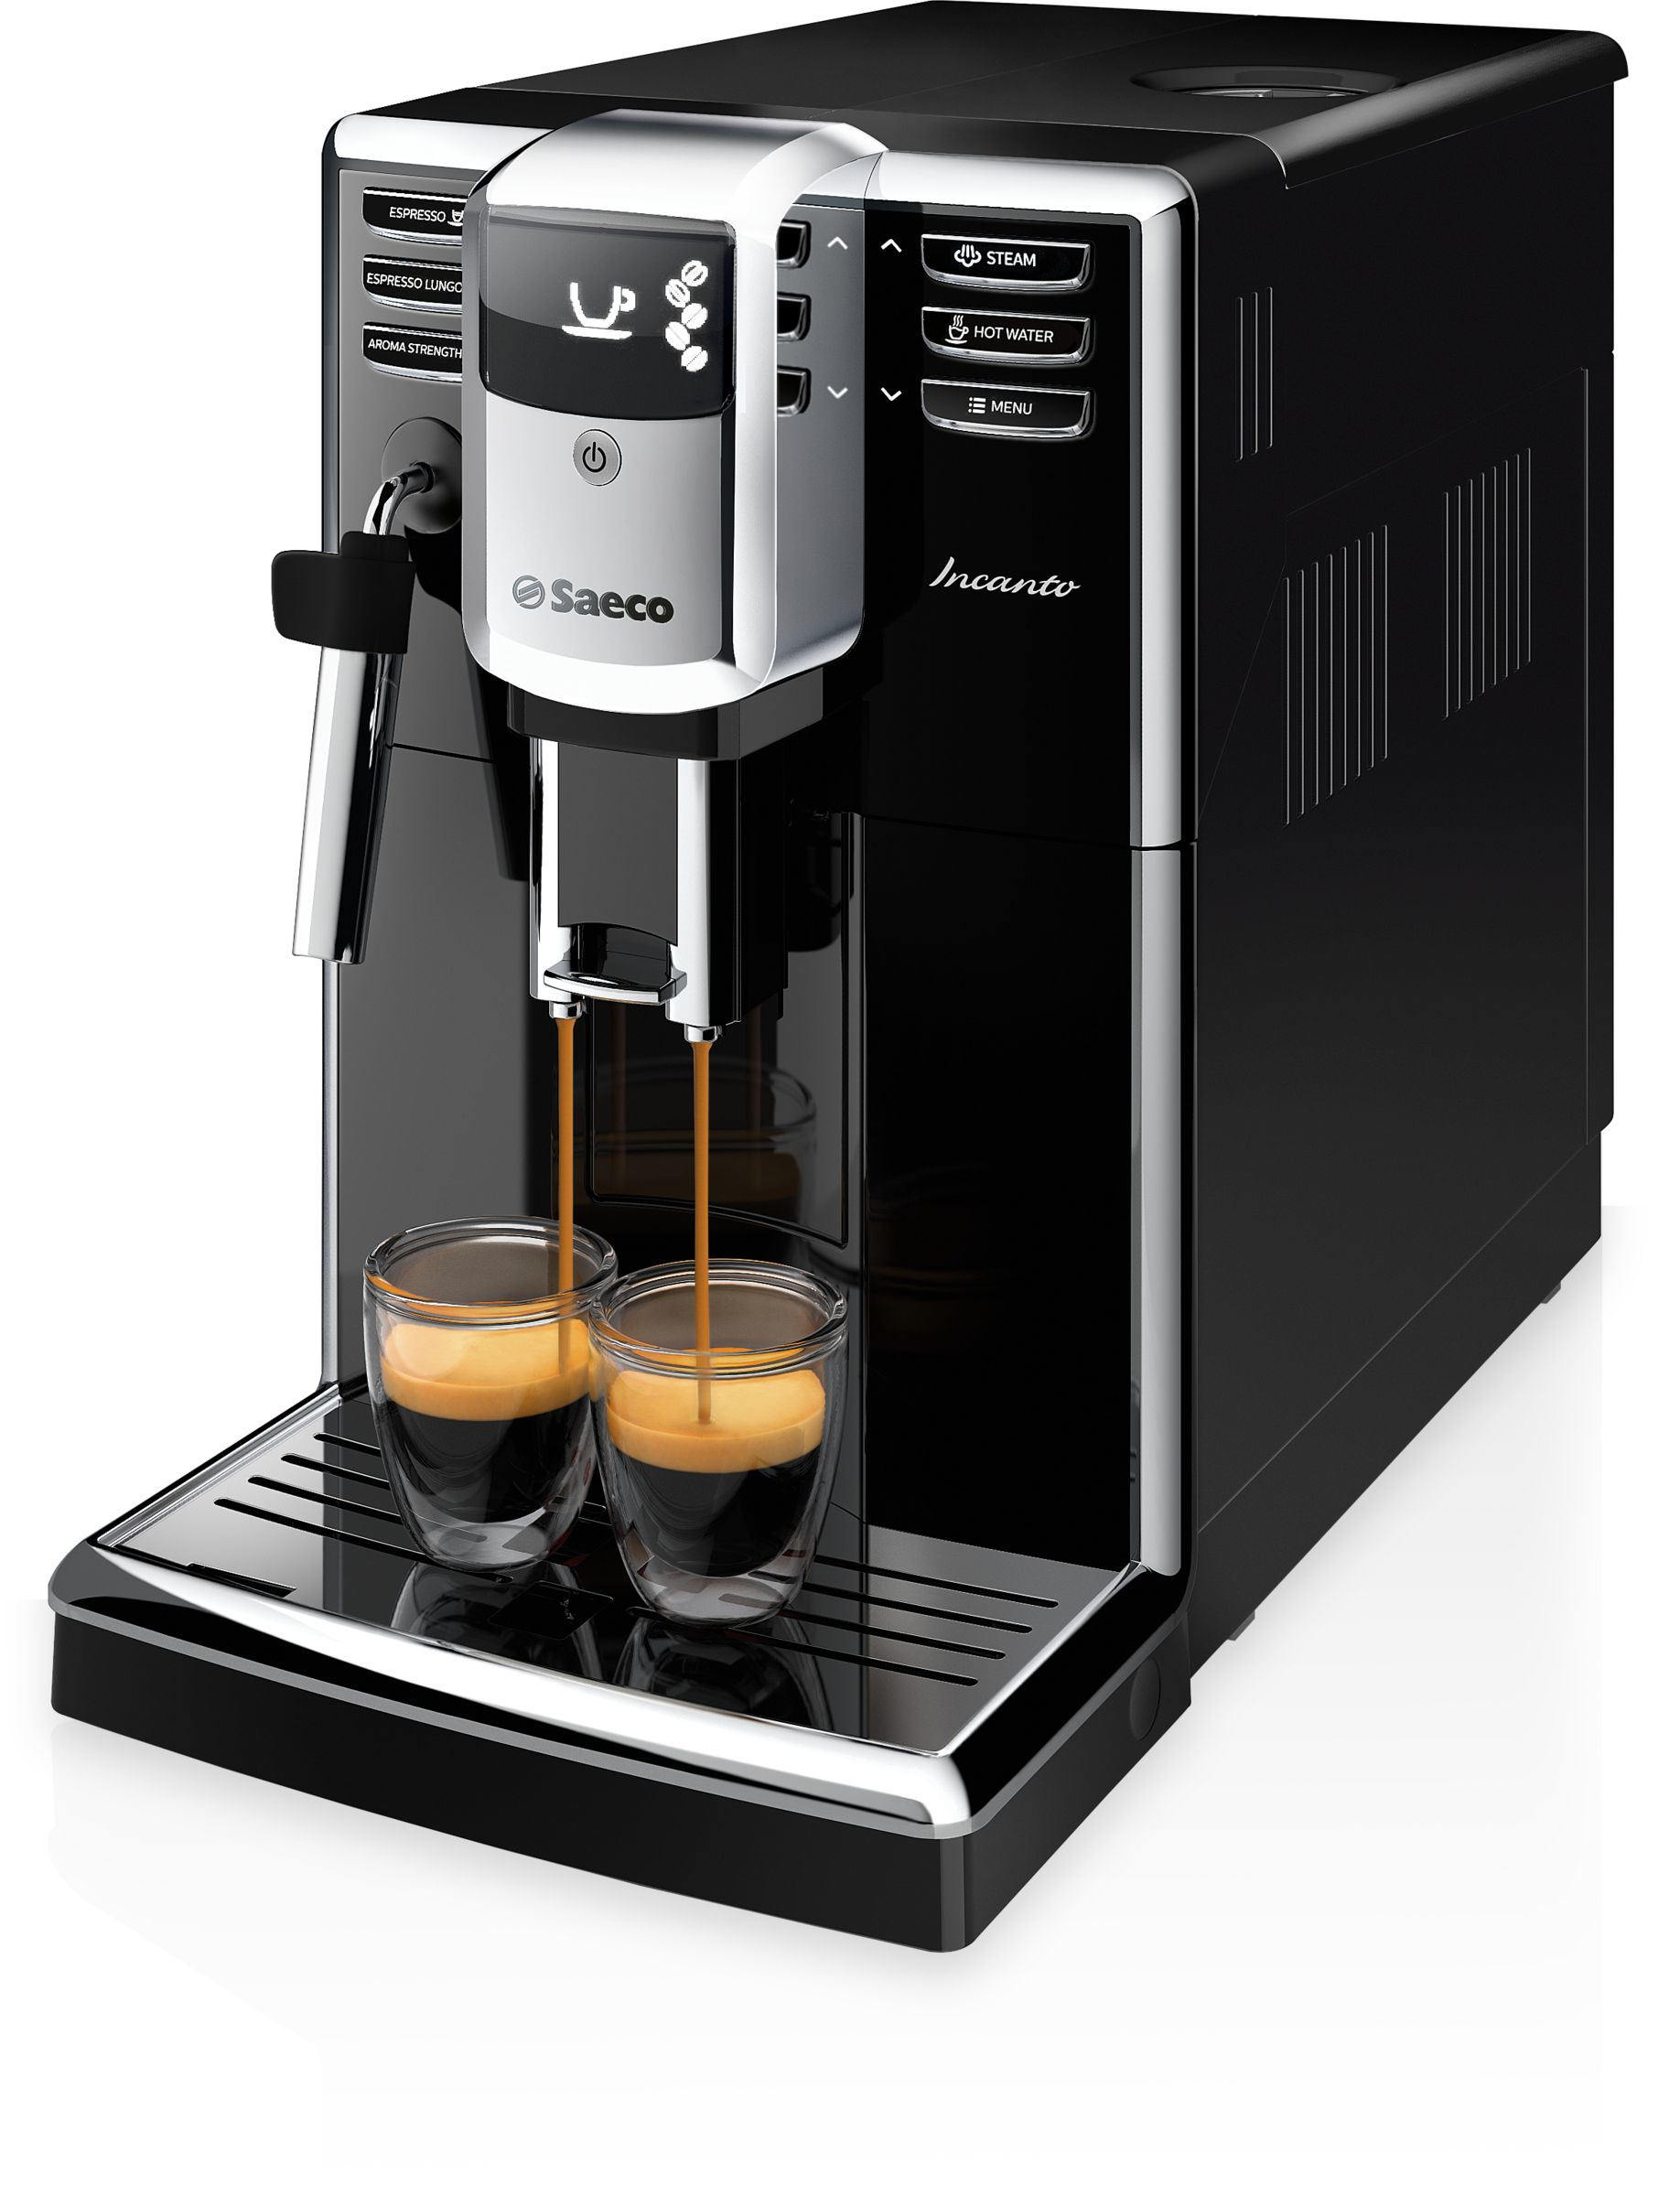 Saeco Incanto HD8911/48 coffee maker